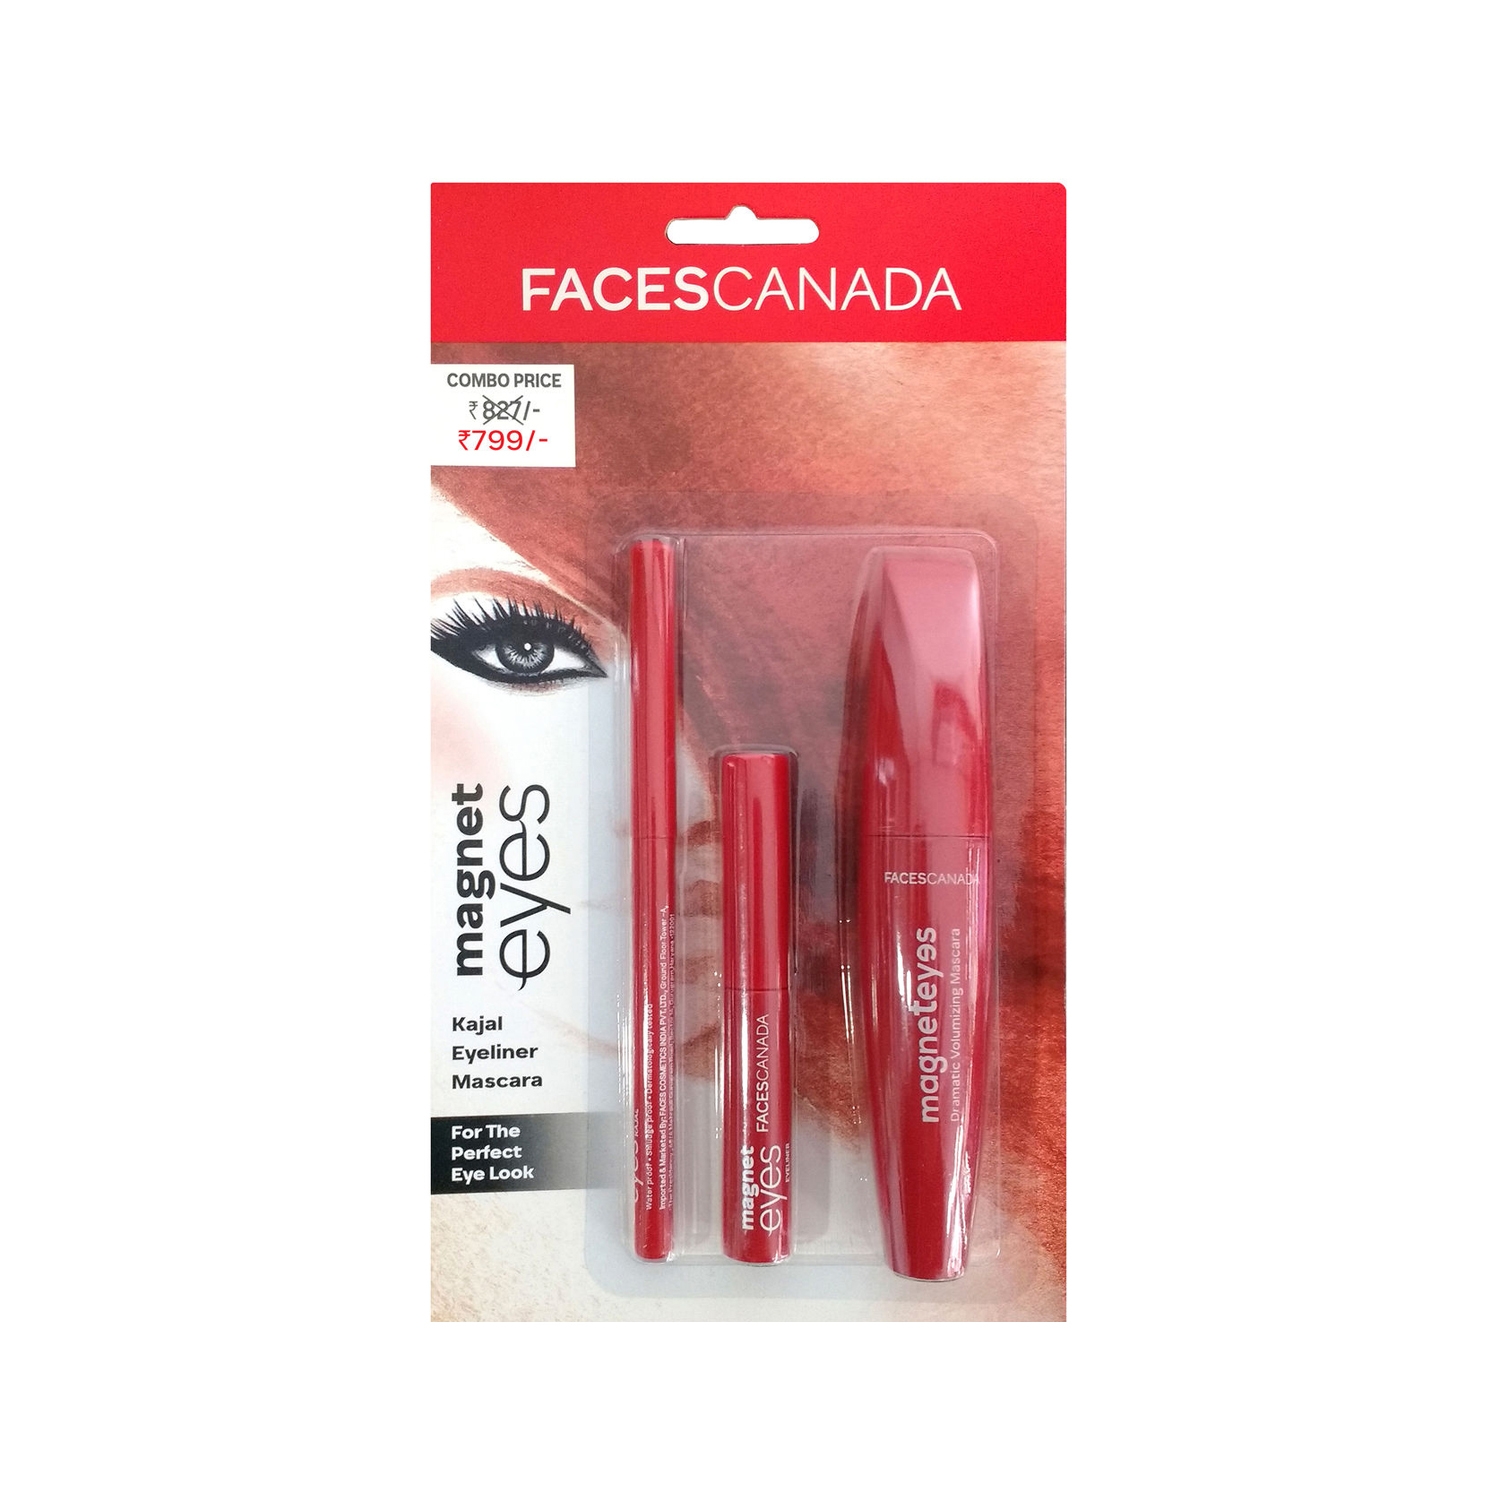 Faces Canada | Faces Canada Magnet Eyes Range Trio Pack - (3Pcs)